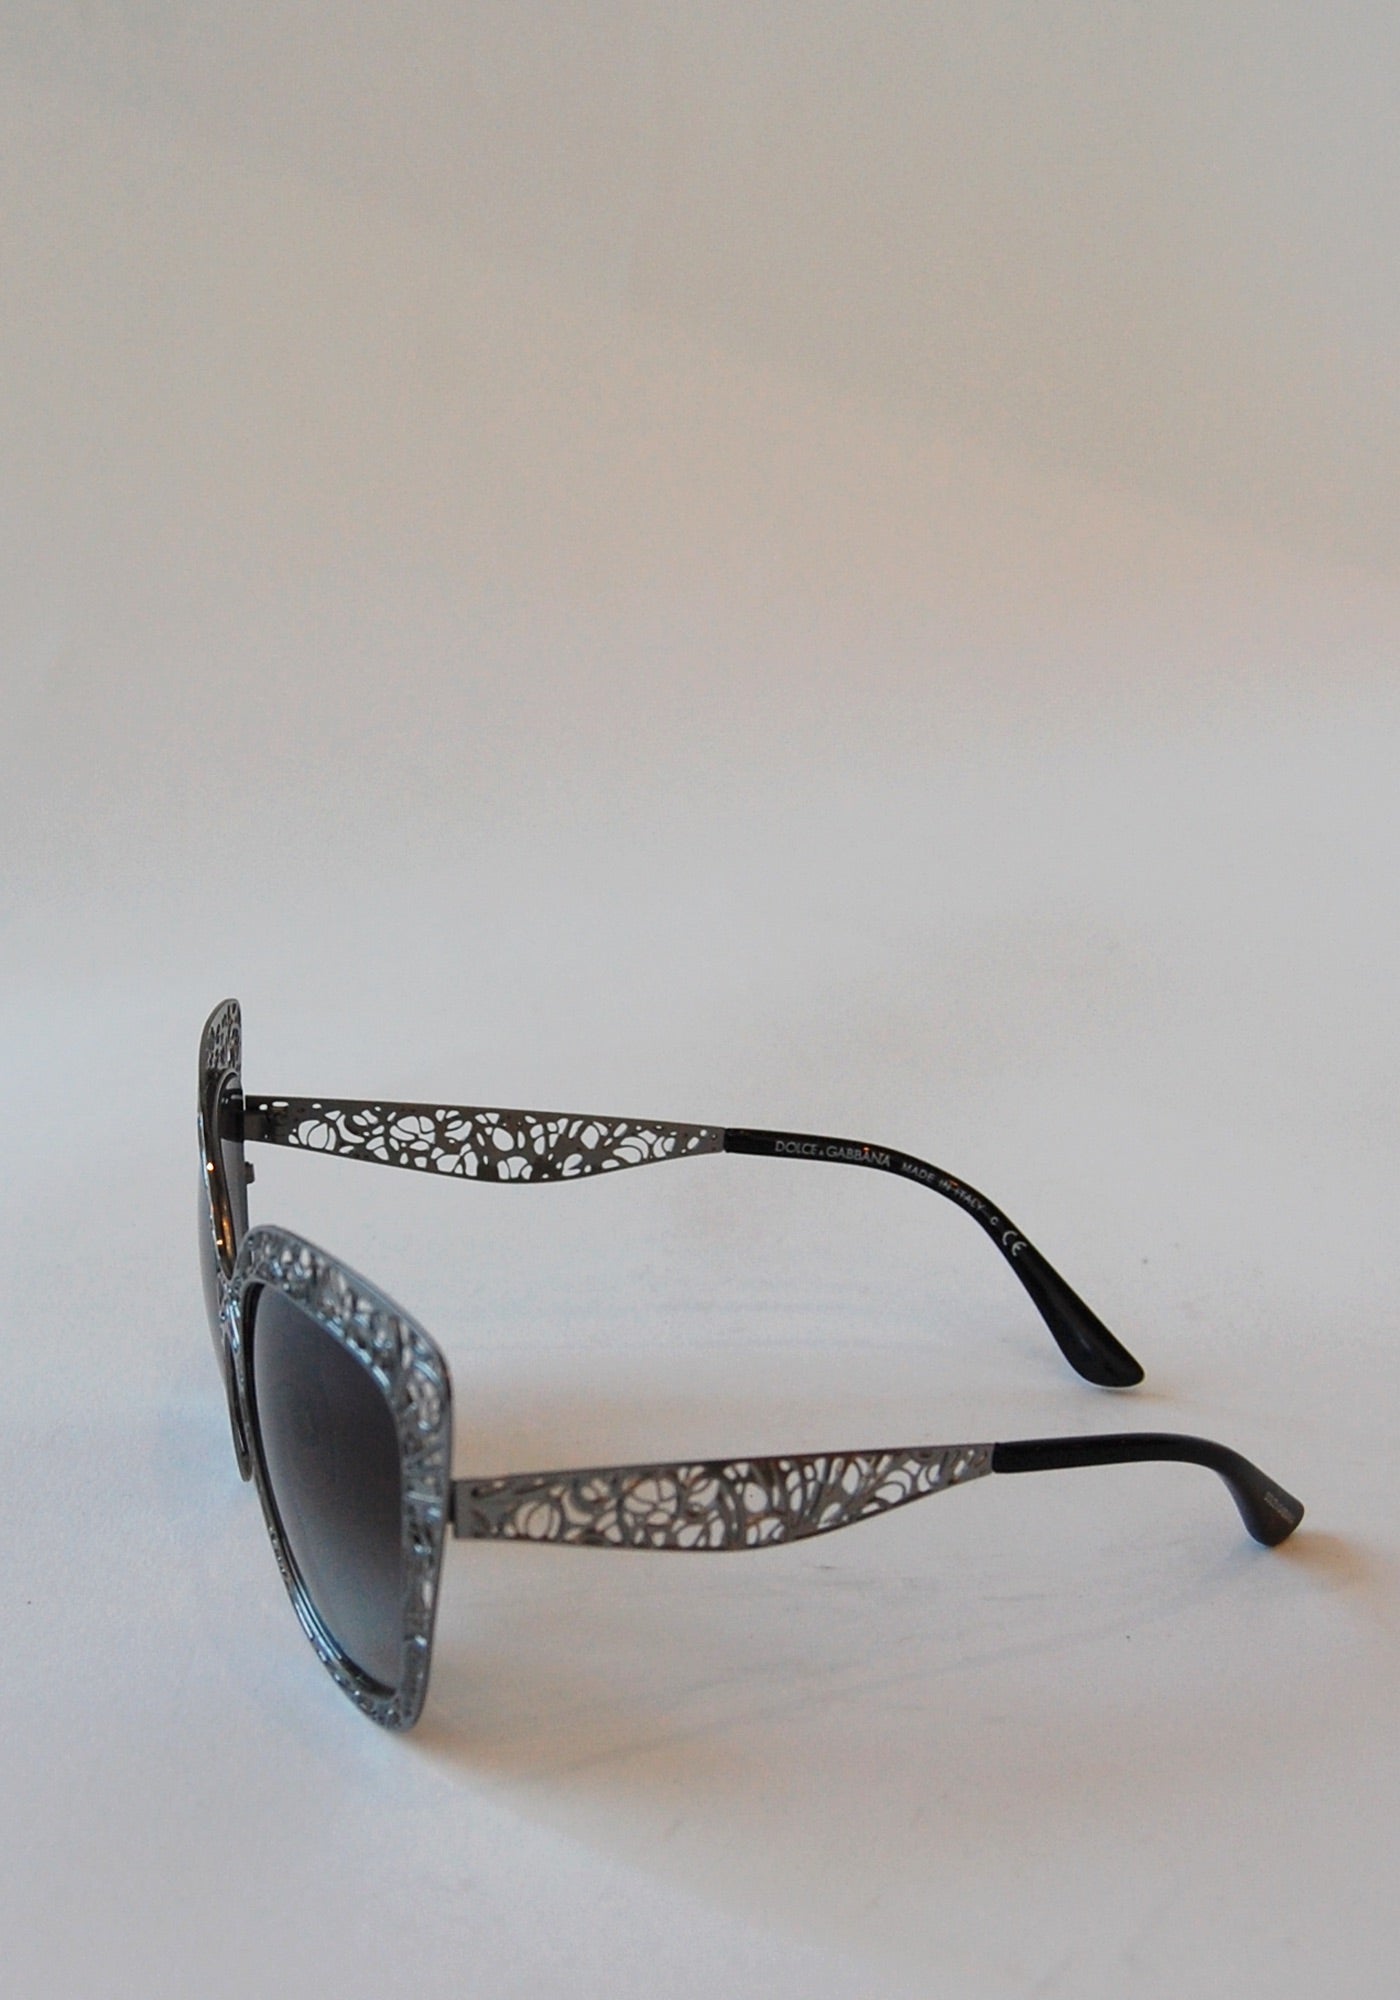 Dolce and Gabbana Silver Sunglasses